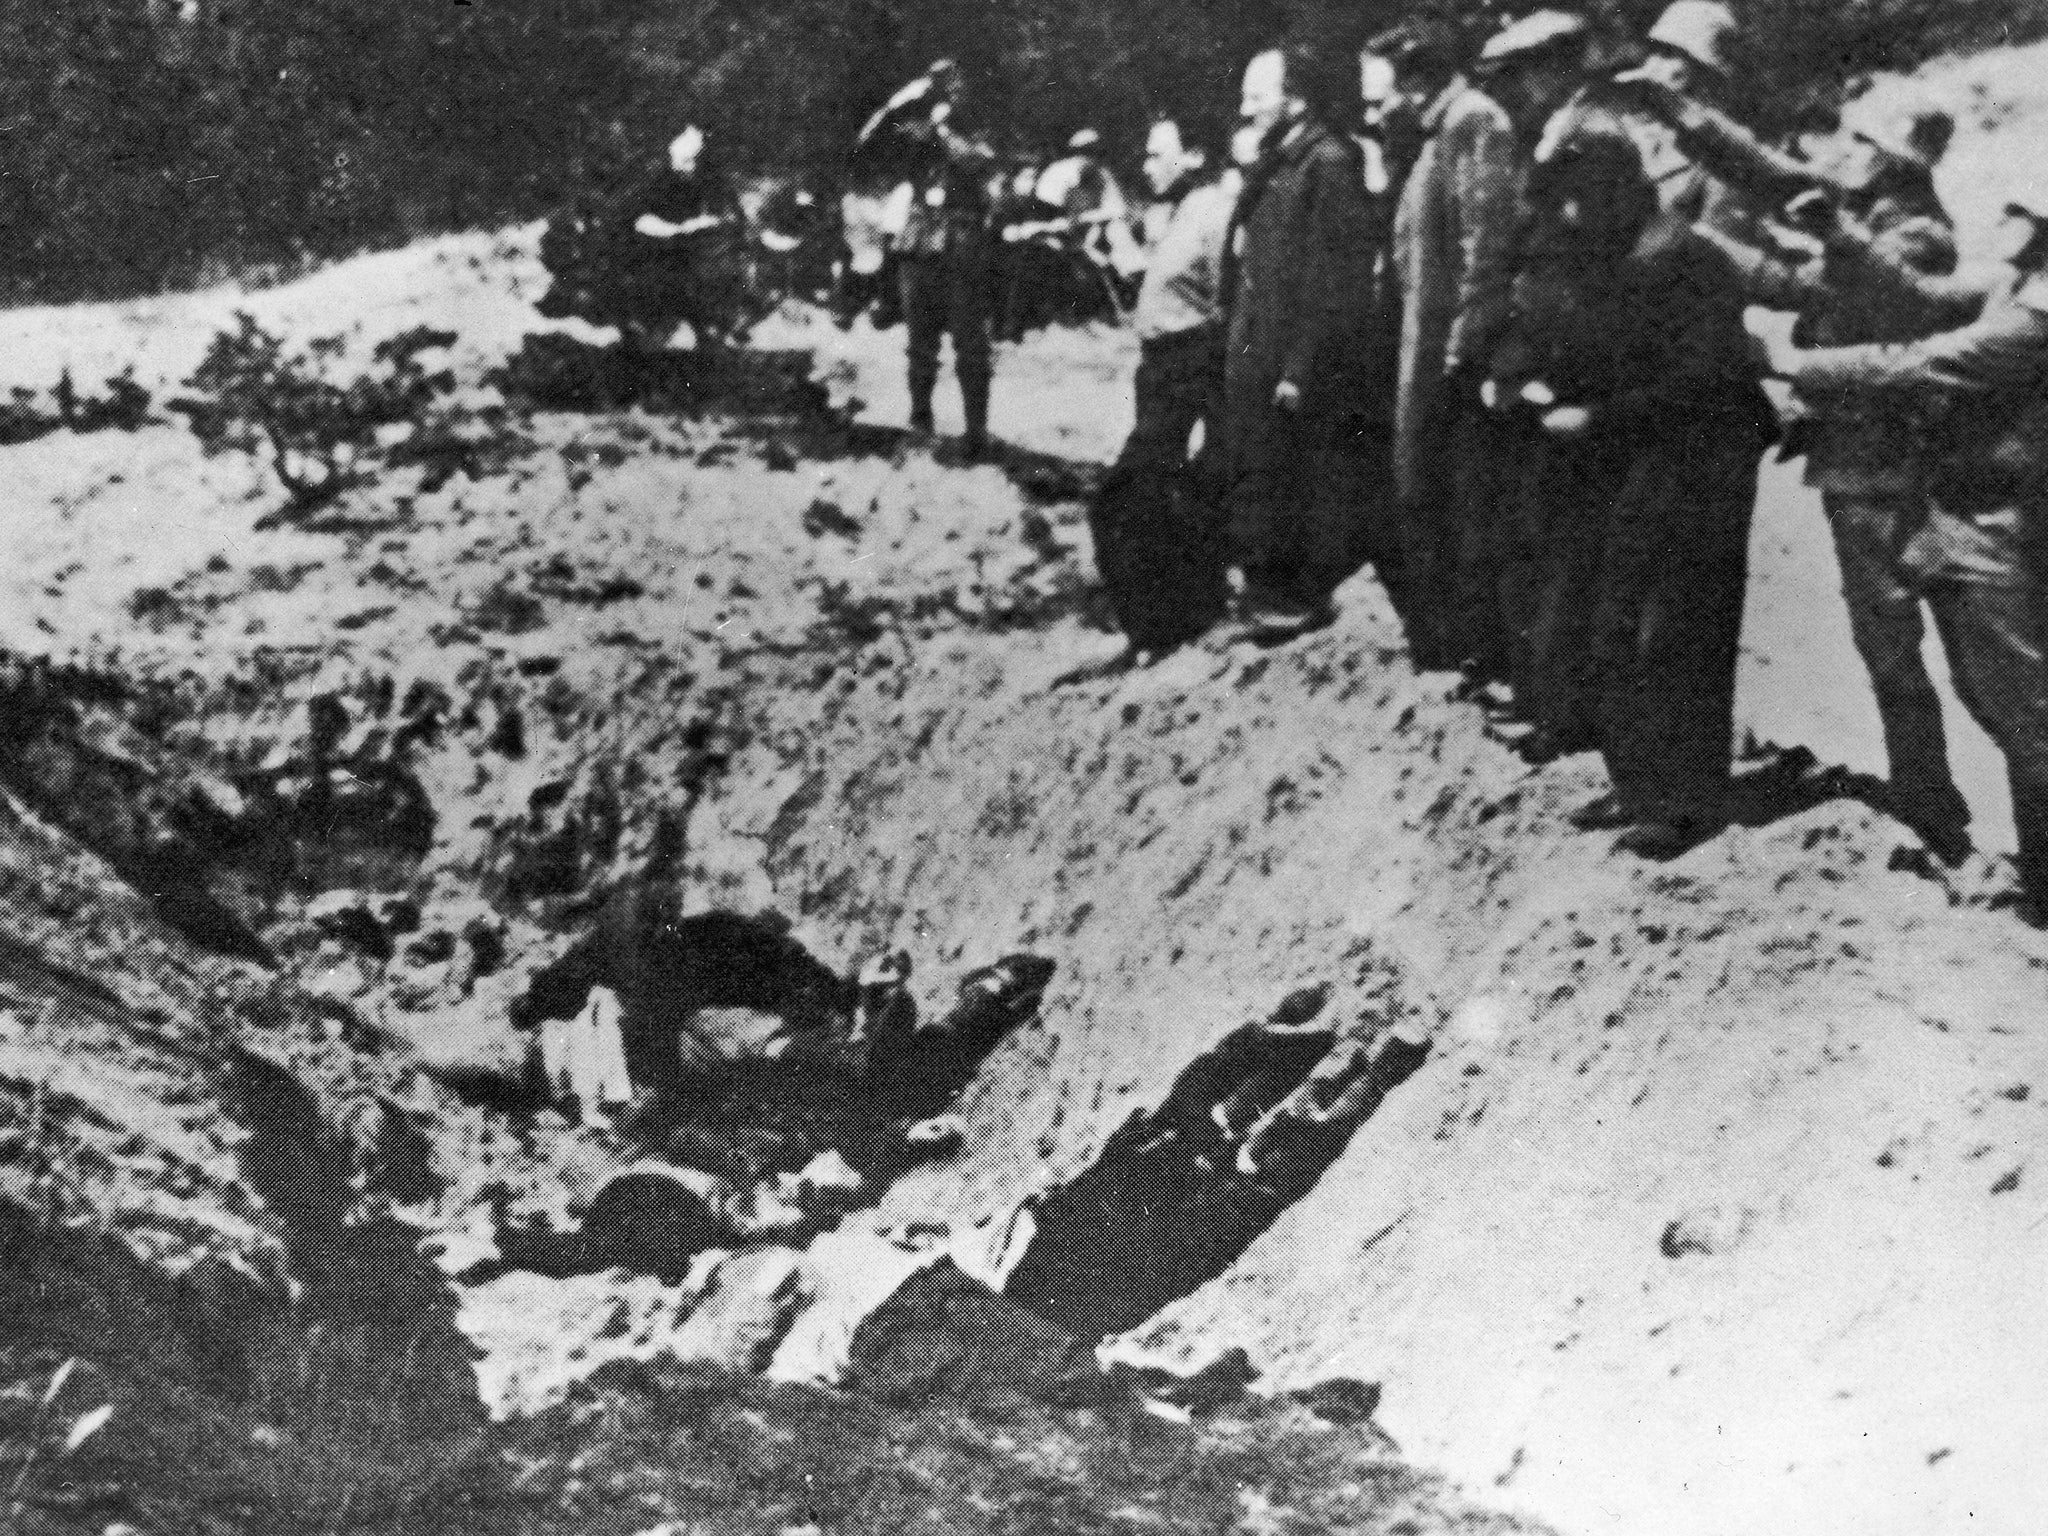 At least 33,000 Jewish Ukrainians were killed at Babi Yar during the Second World War